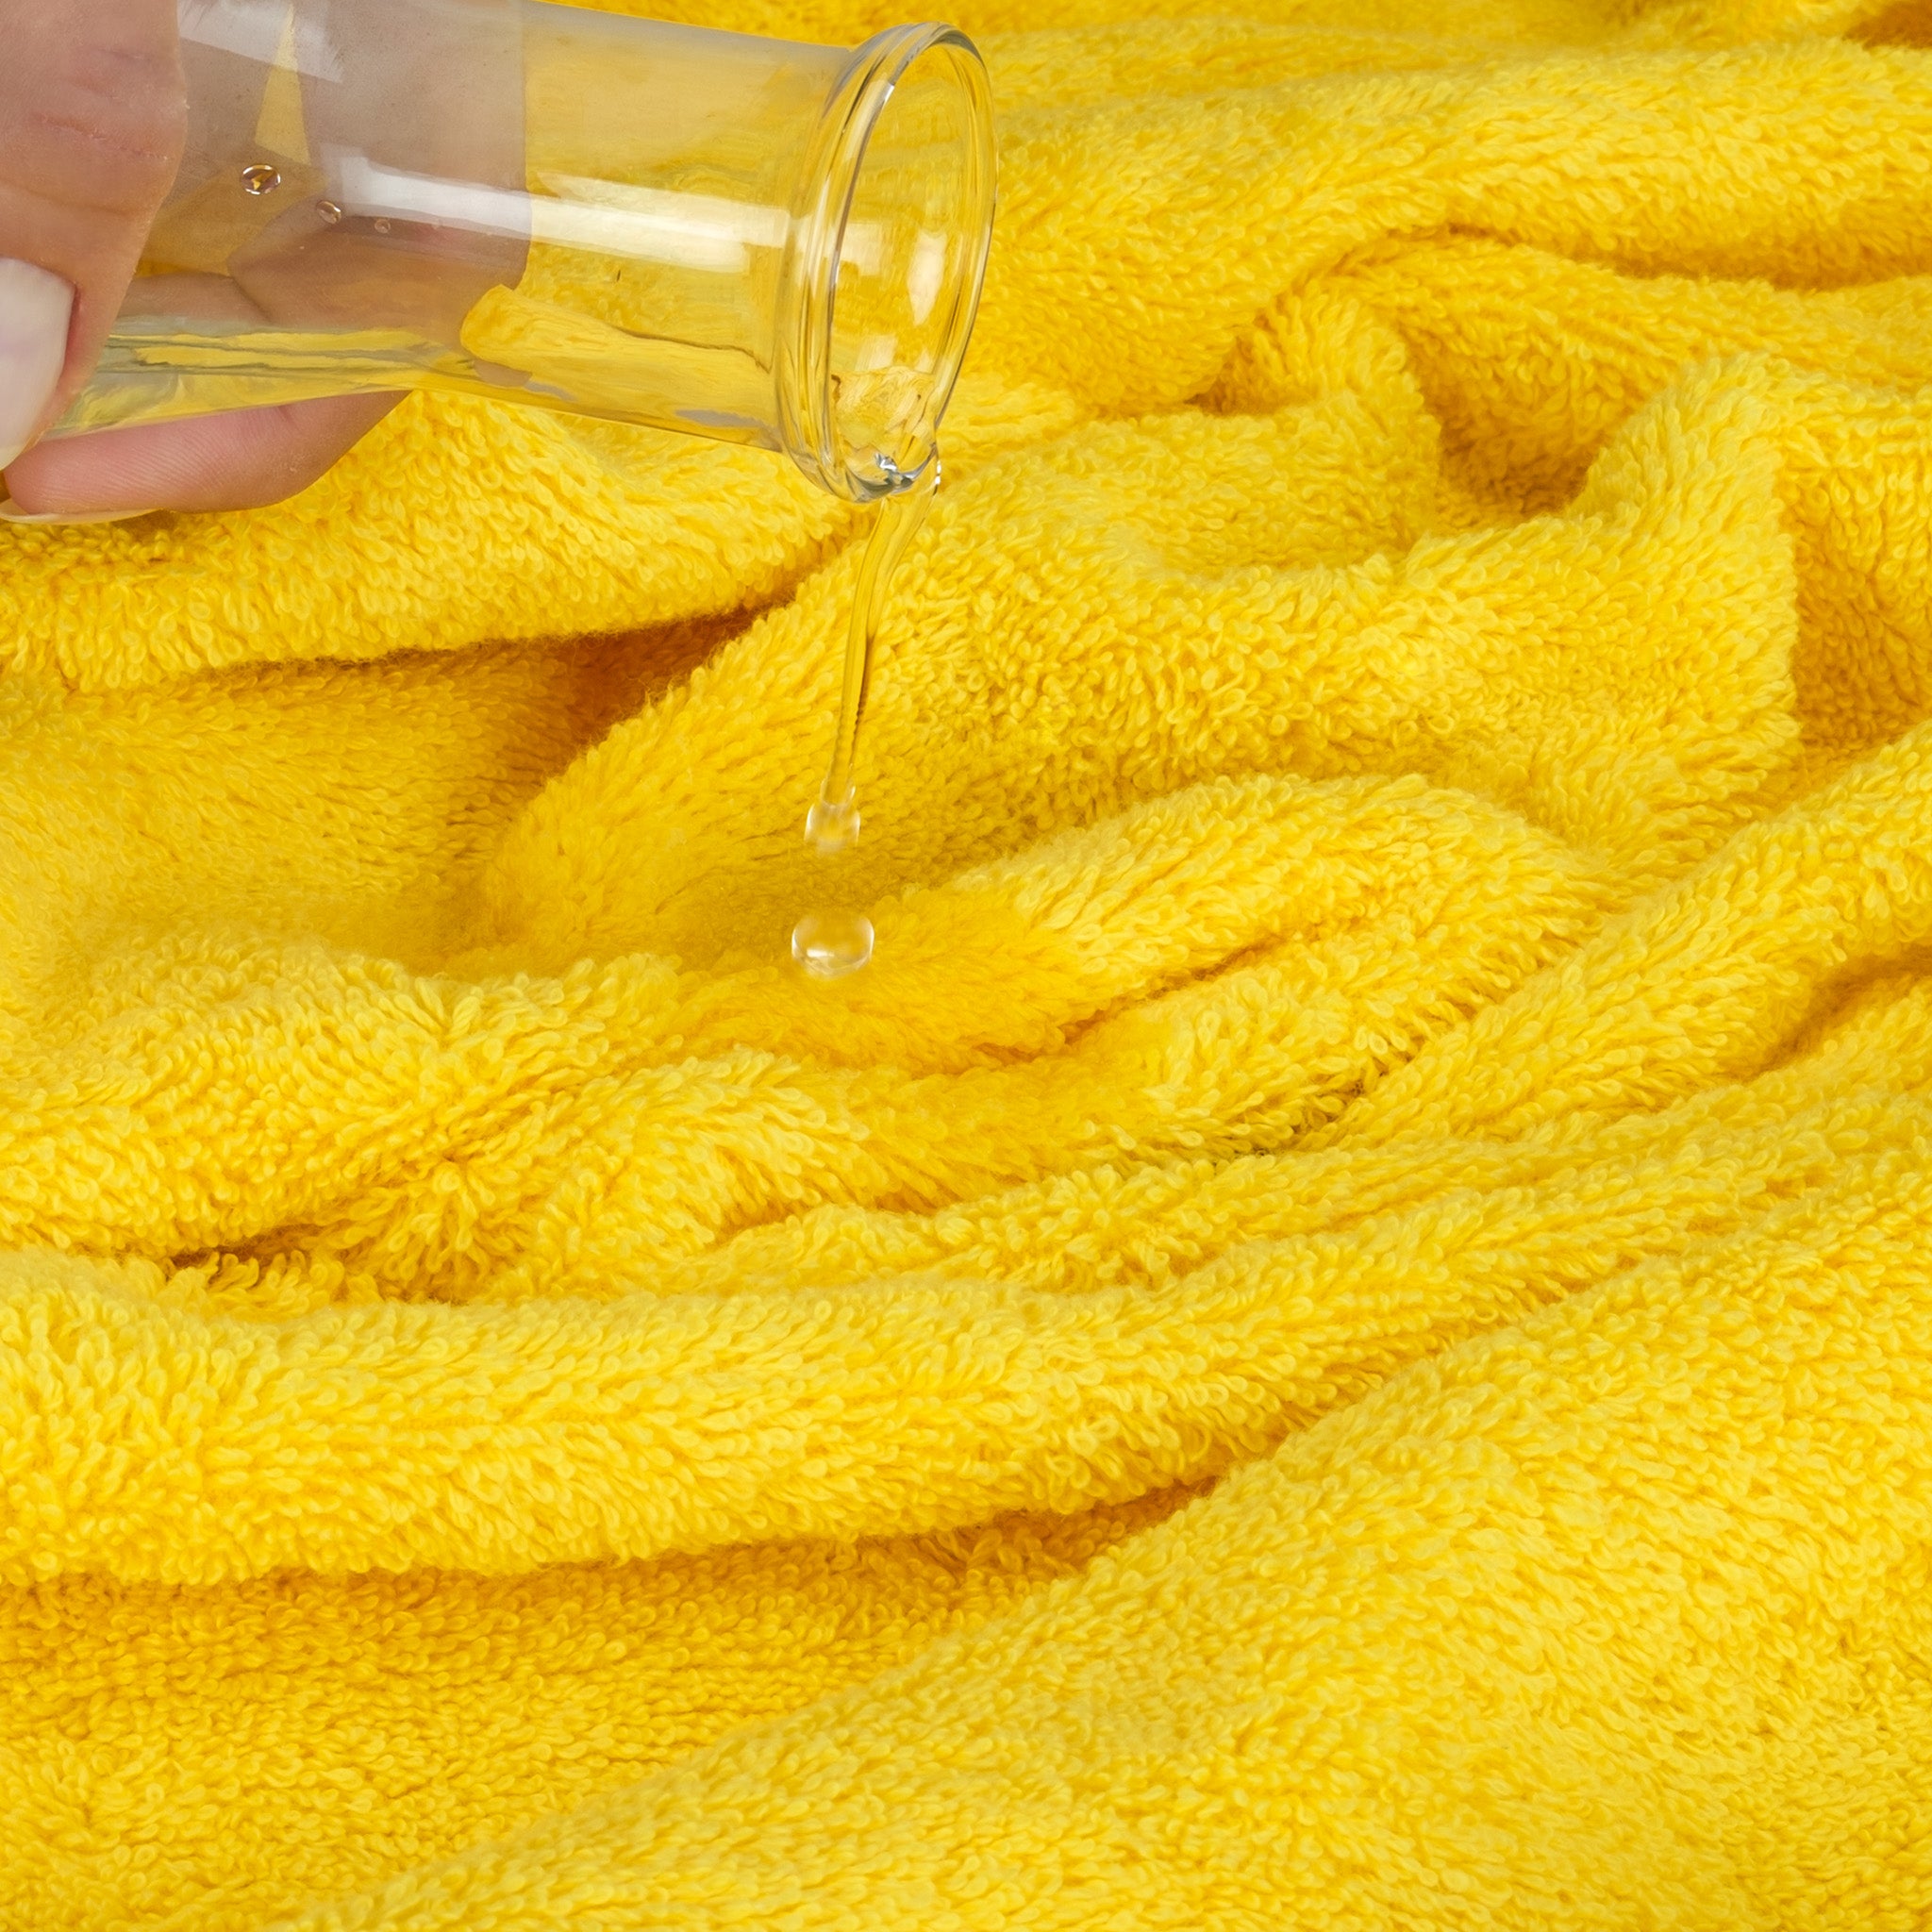 American Soft Linen Bekos 100% Cotton Turkish Towels, 4 Piece Washcloth Towel Set -yellow-06